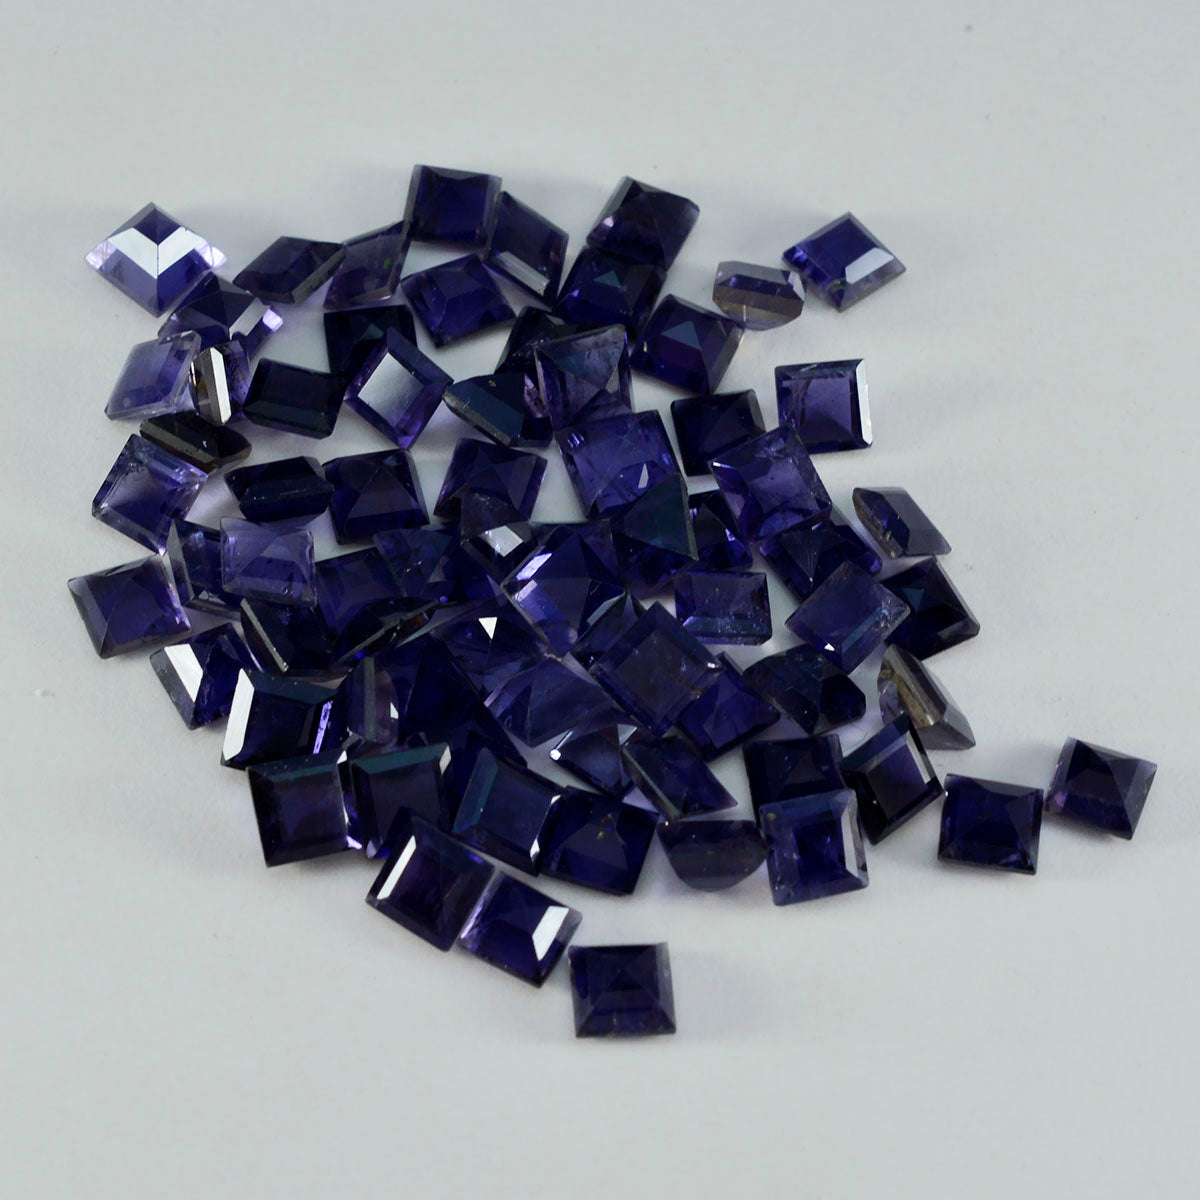 Riyogems 1PC Blue Iolite Faceted 7x7 mm Square Shape A+ Quality Gemstone